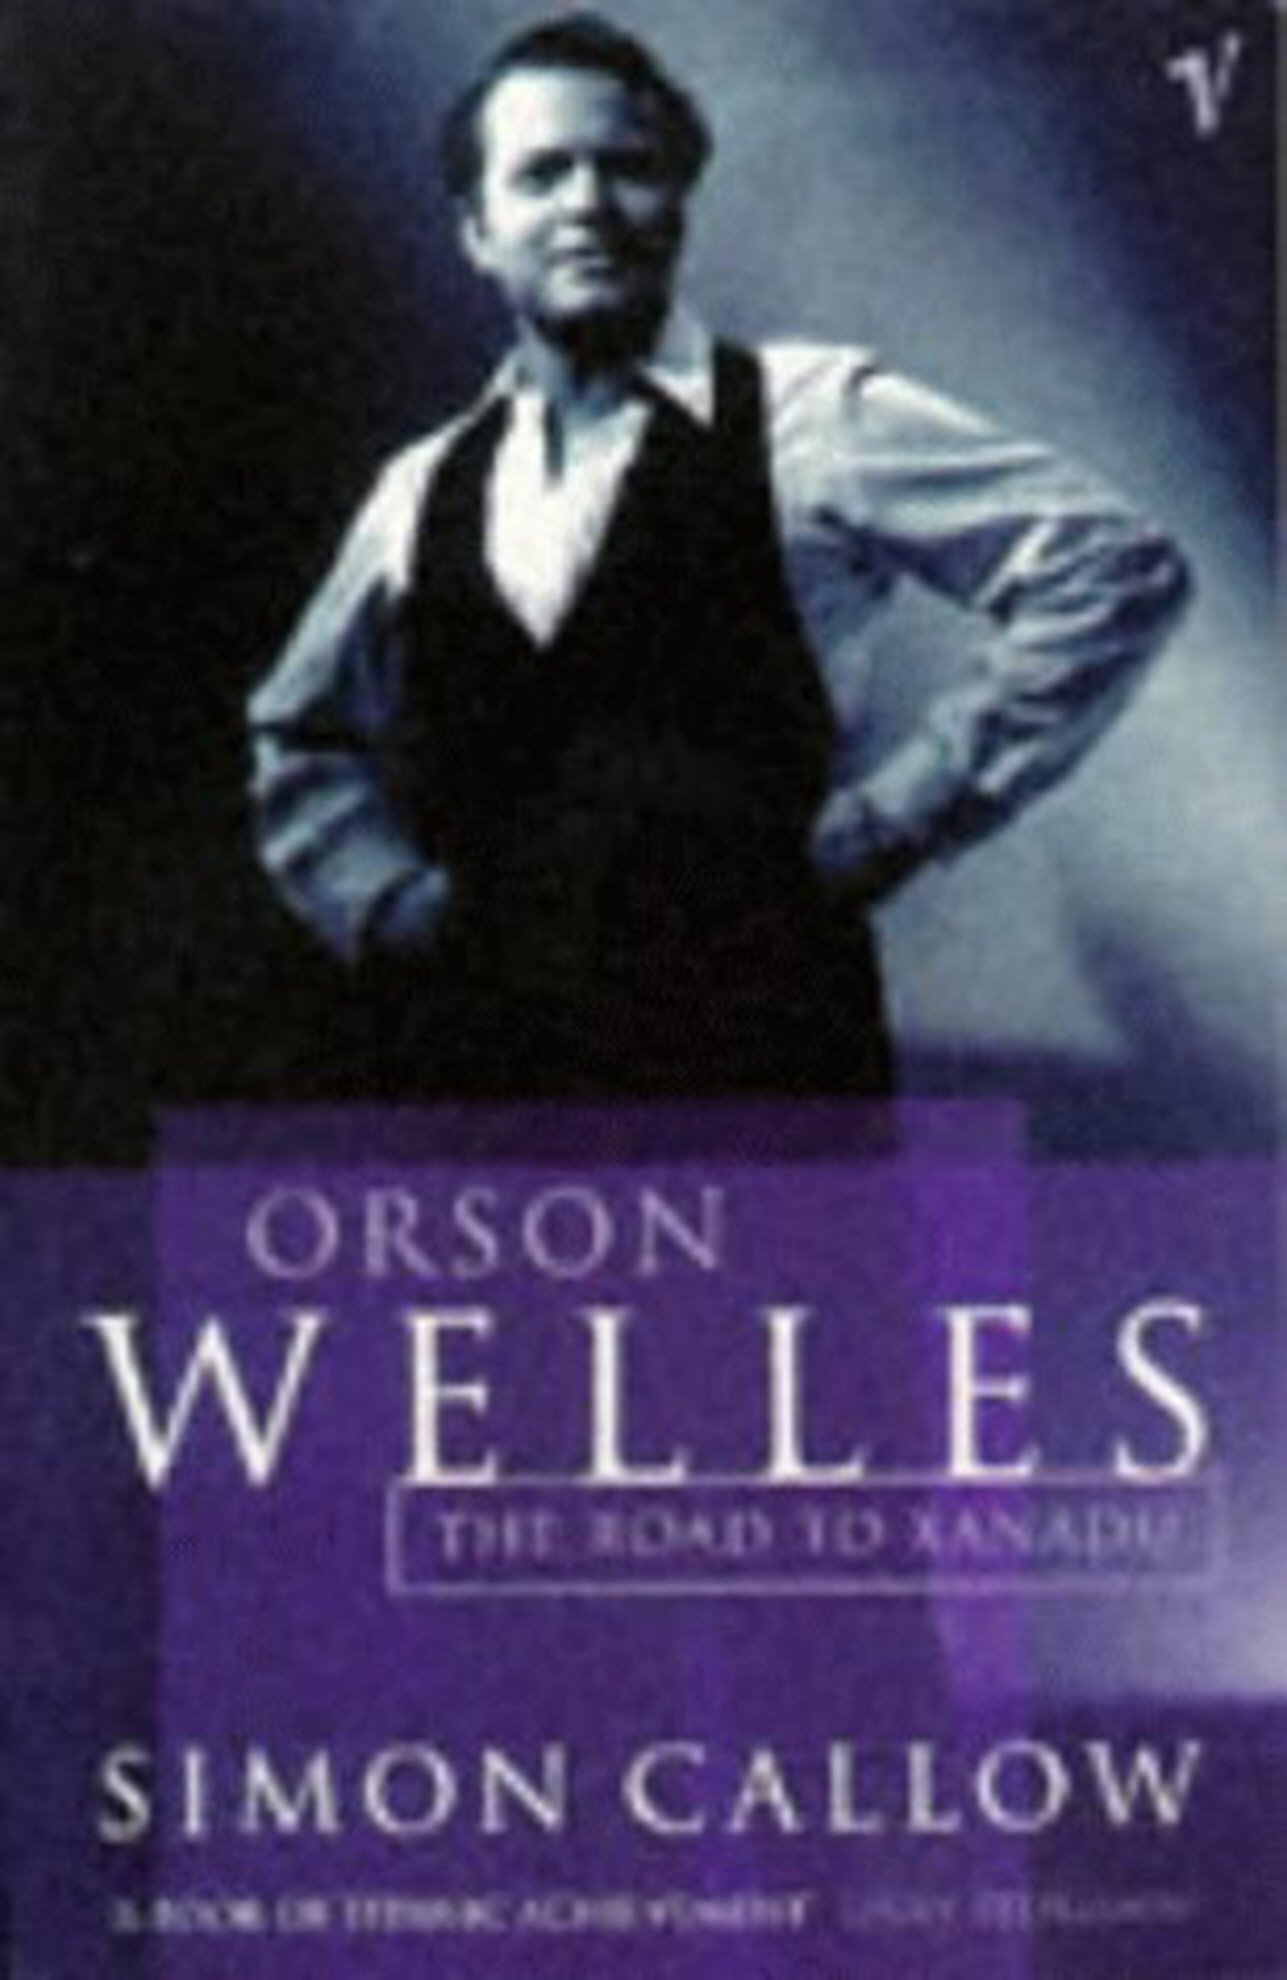 Orson Welles, Volume 1: The Road to Xanadu by Simon Callow.